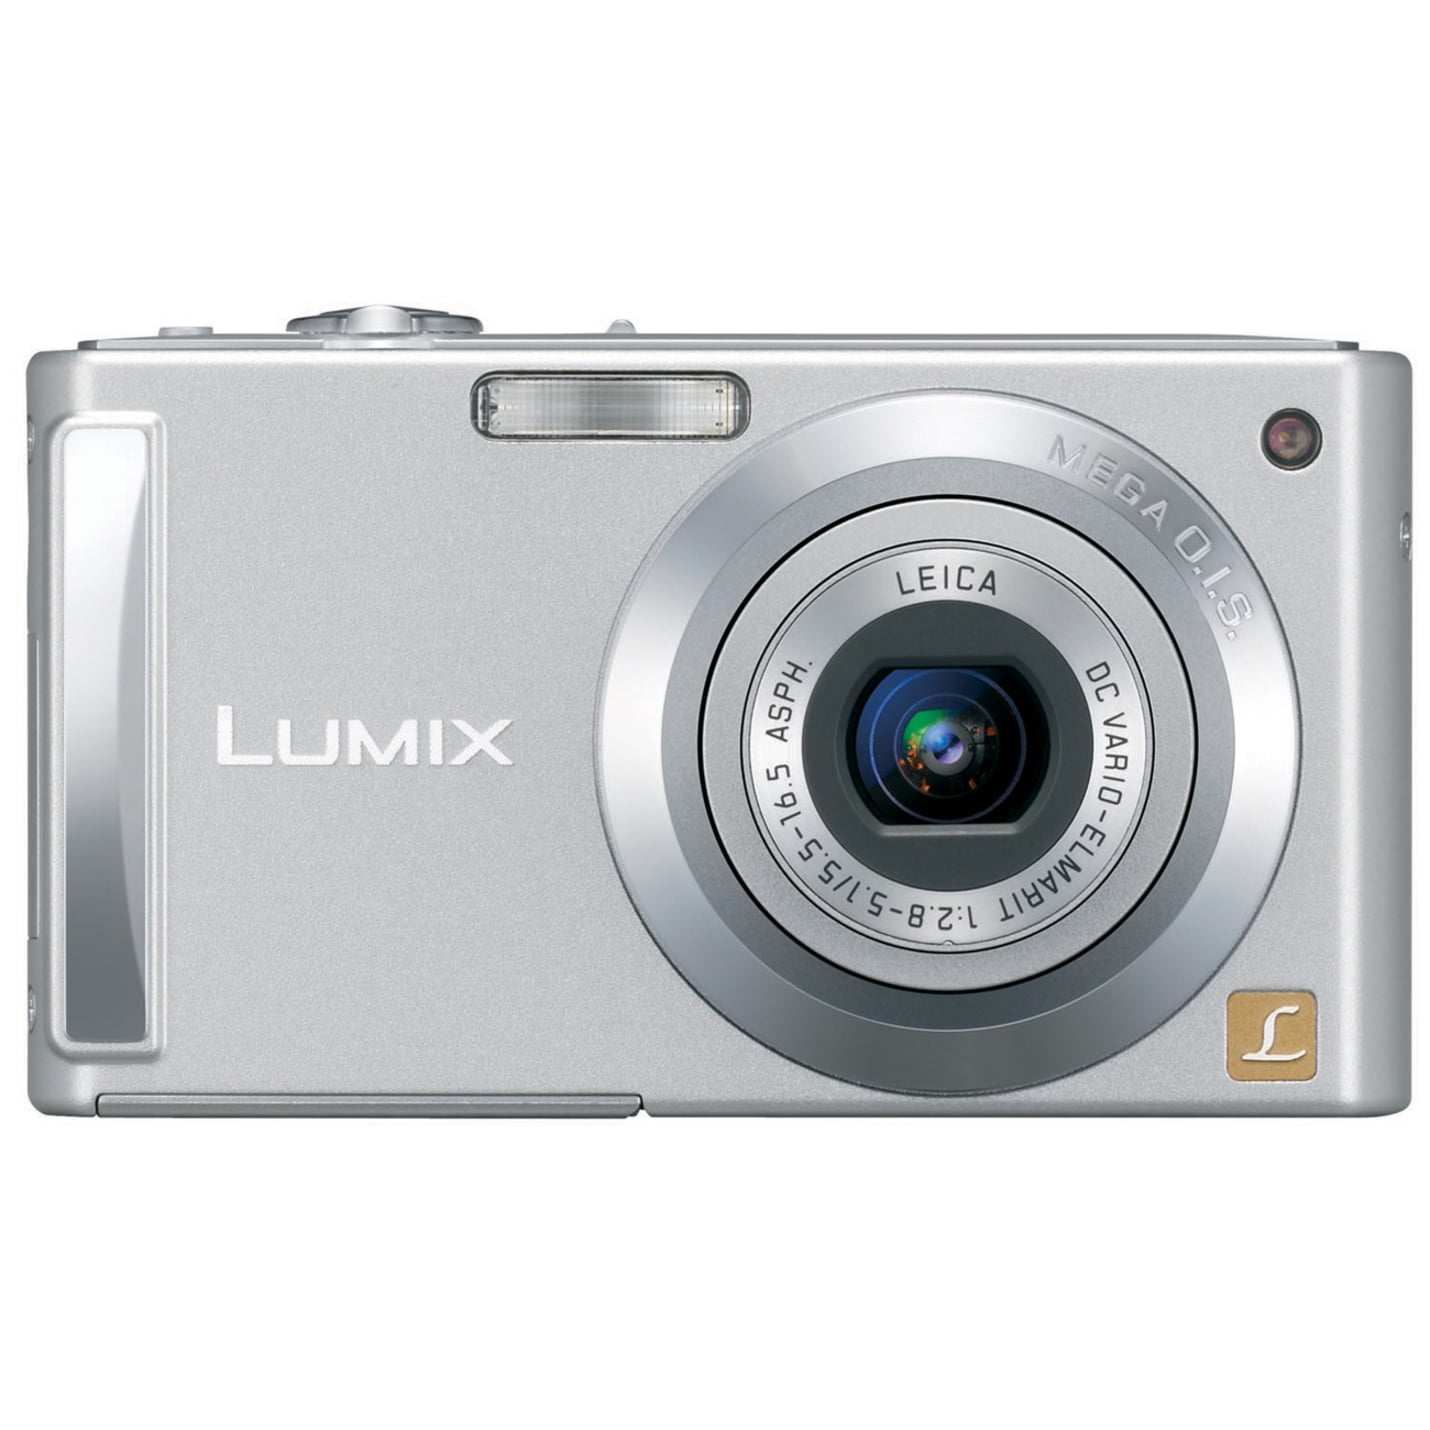 Panasonic Lumix DMC-FS3 8.1 Megapixel Compact Camera, Silver